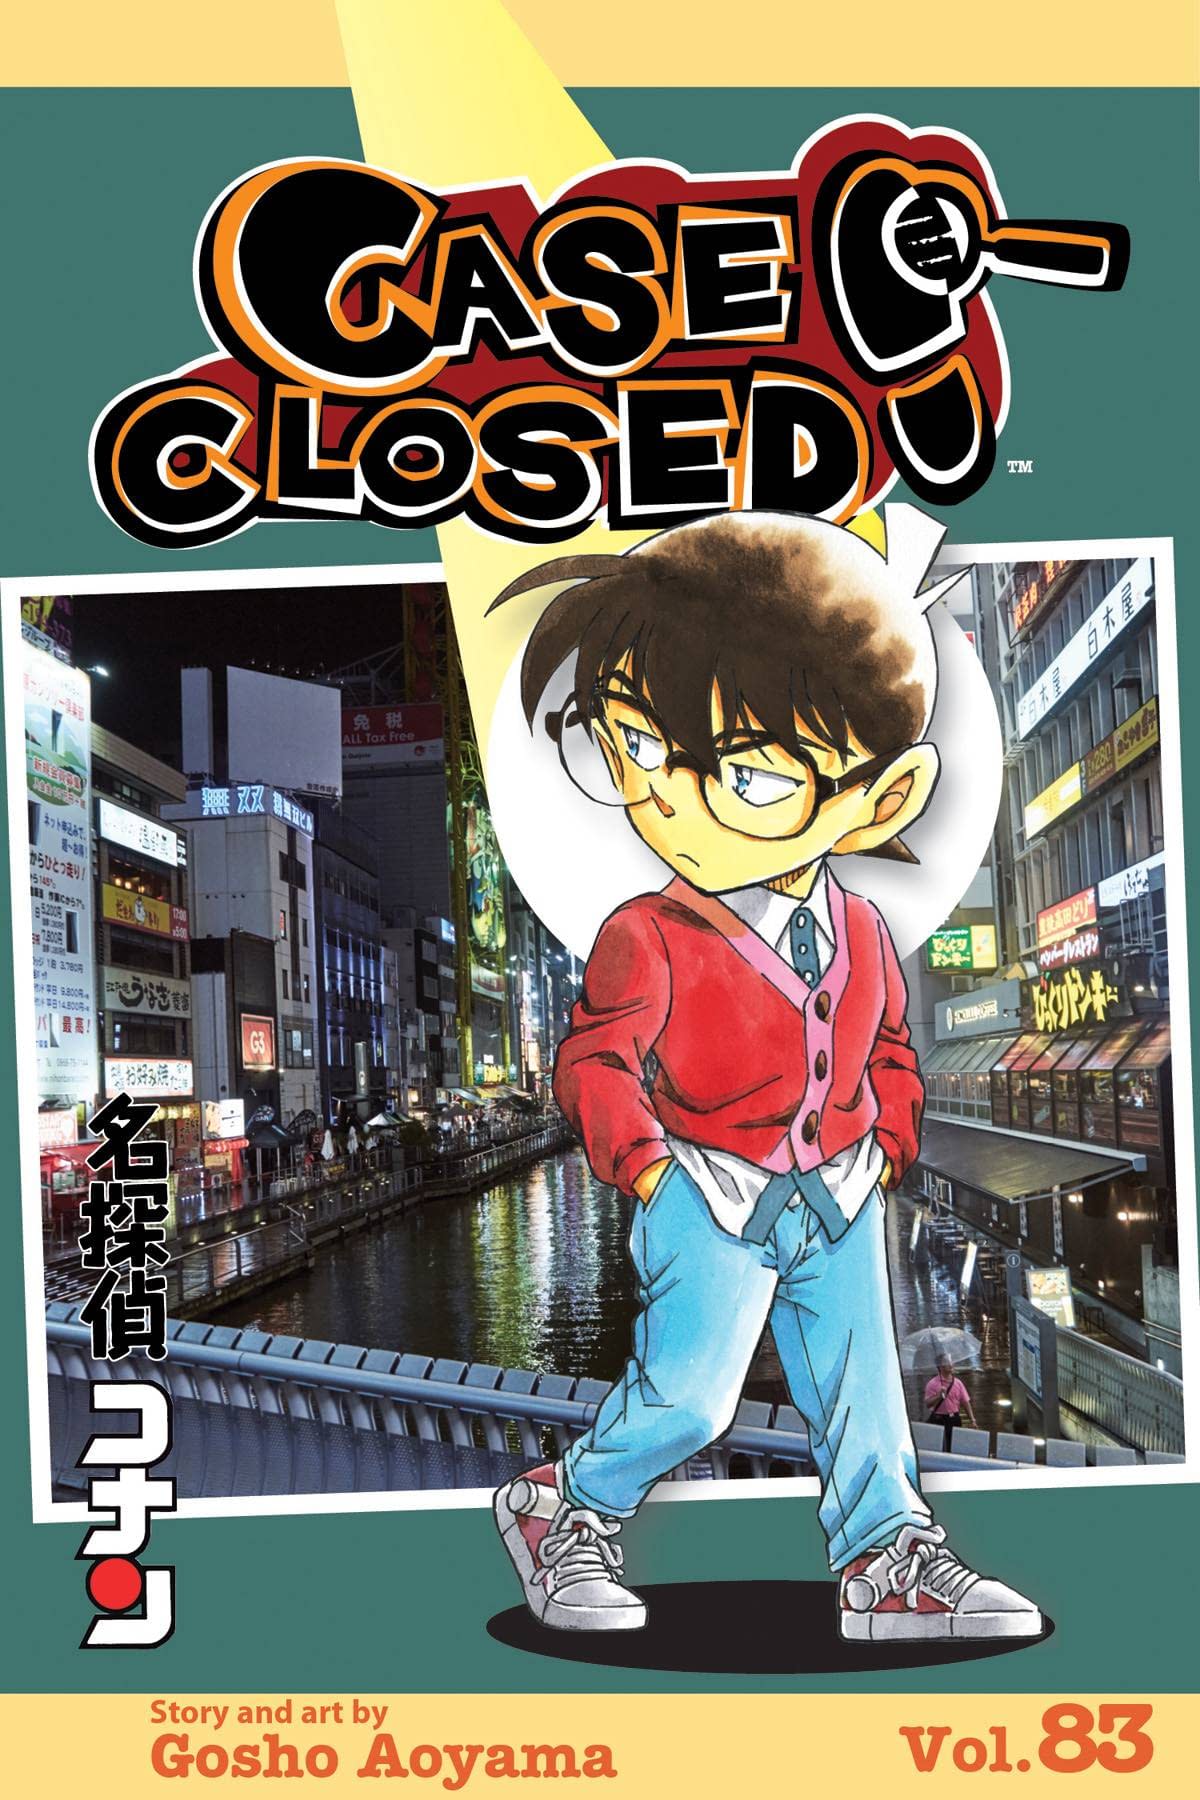 ICv2: NYCC: Viz Announces 'Yashahime' Manga, New Junji Ito Collection